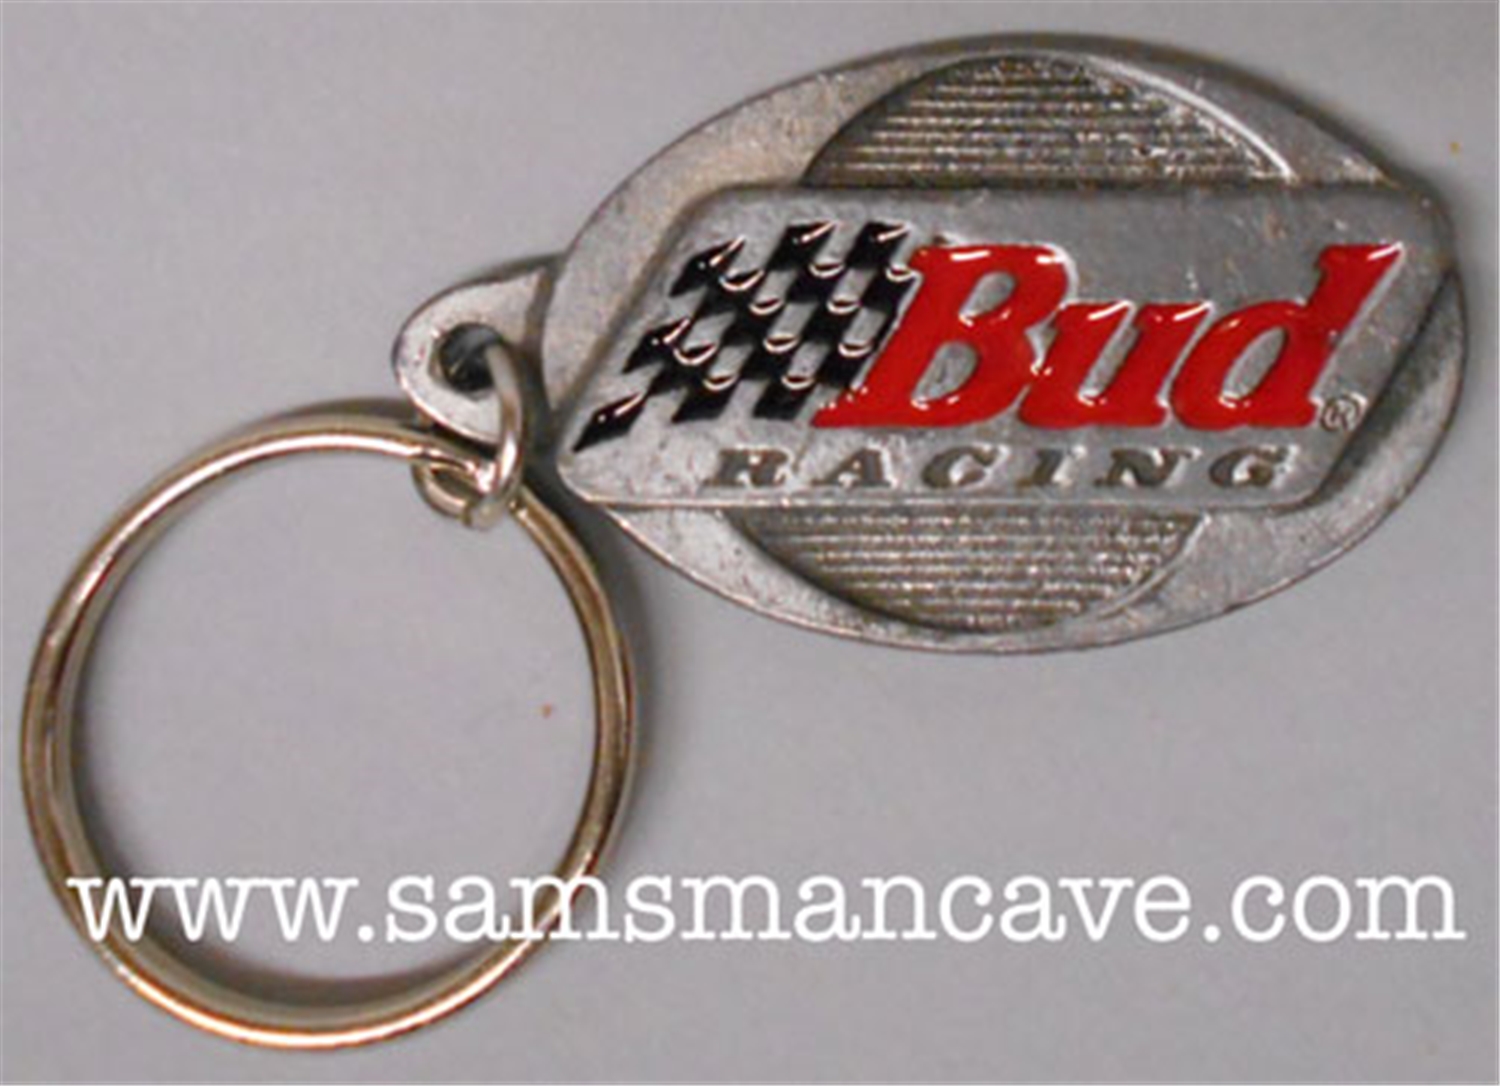 Budweiser Racing Pewter Keychain